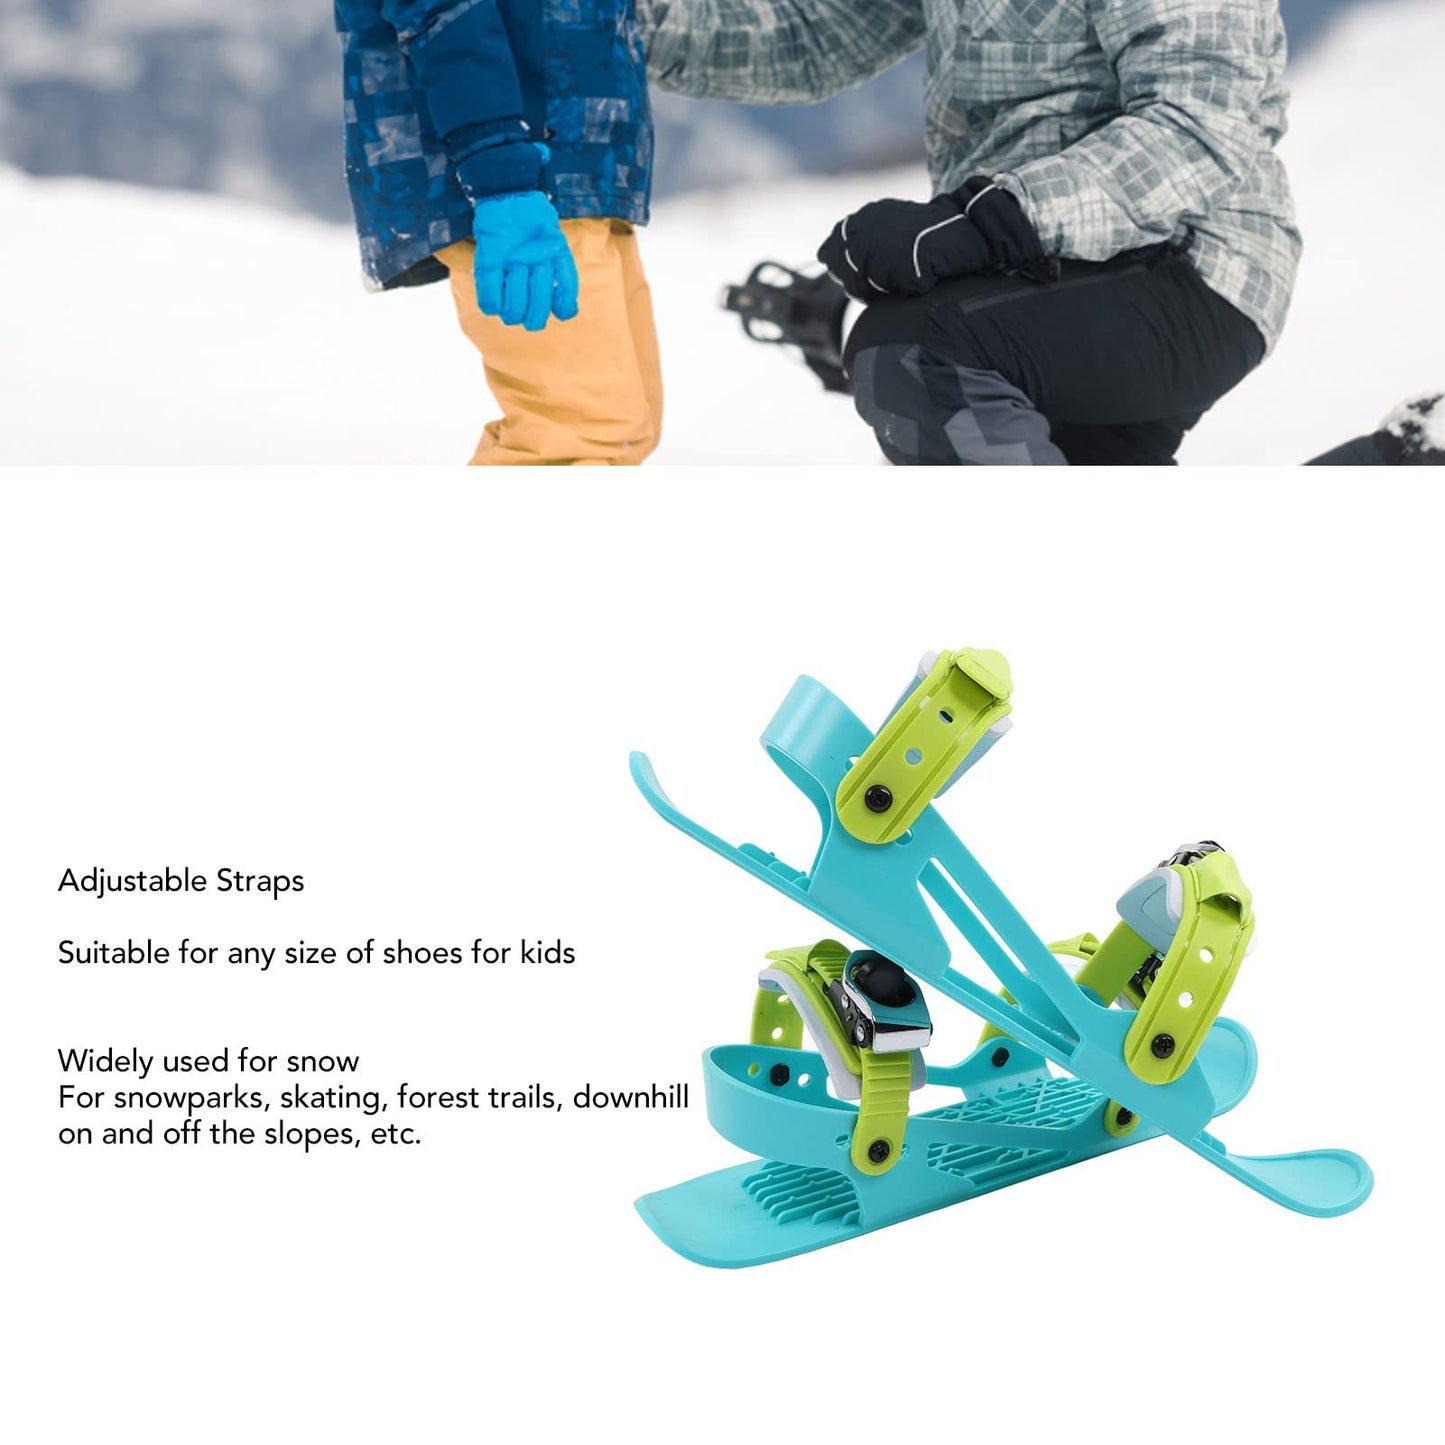 Mini Ski Skates, Strap Short Snowskates Snowblades Skiboards 1 Pair Skis for Winter Shoes, Portable Snowboard Shoes for Children, Outdoor Skiing Winter Sports Equipment